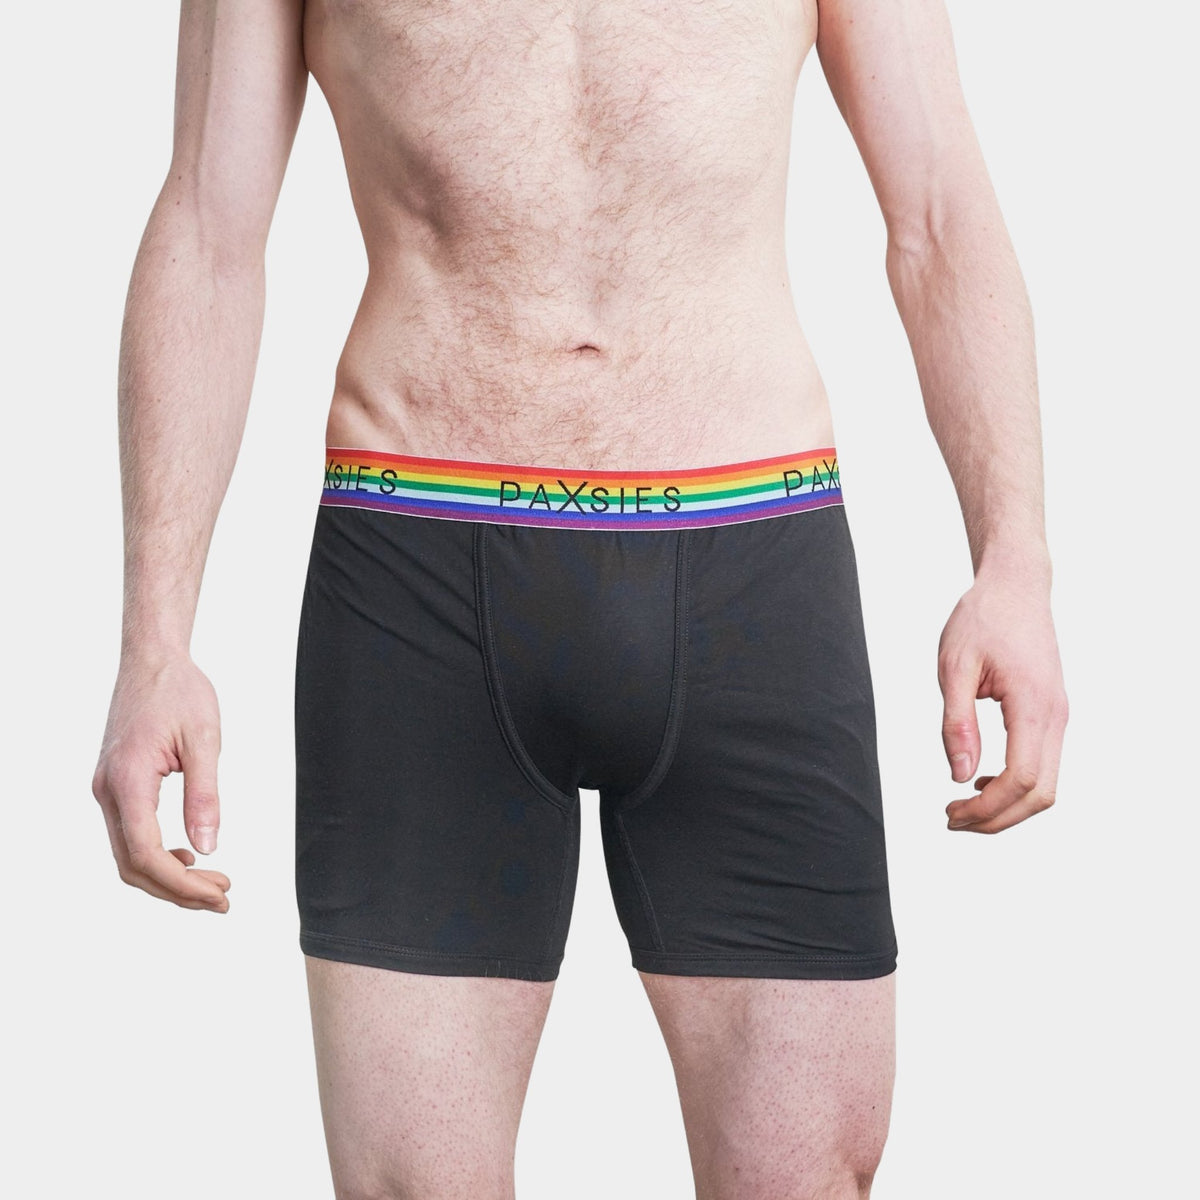 Pride Gender-Neutral Boxers with Pockets - Black – Paxsies